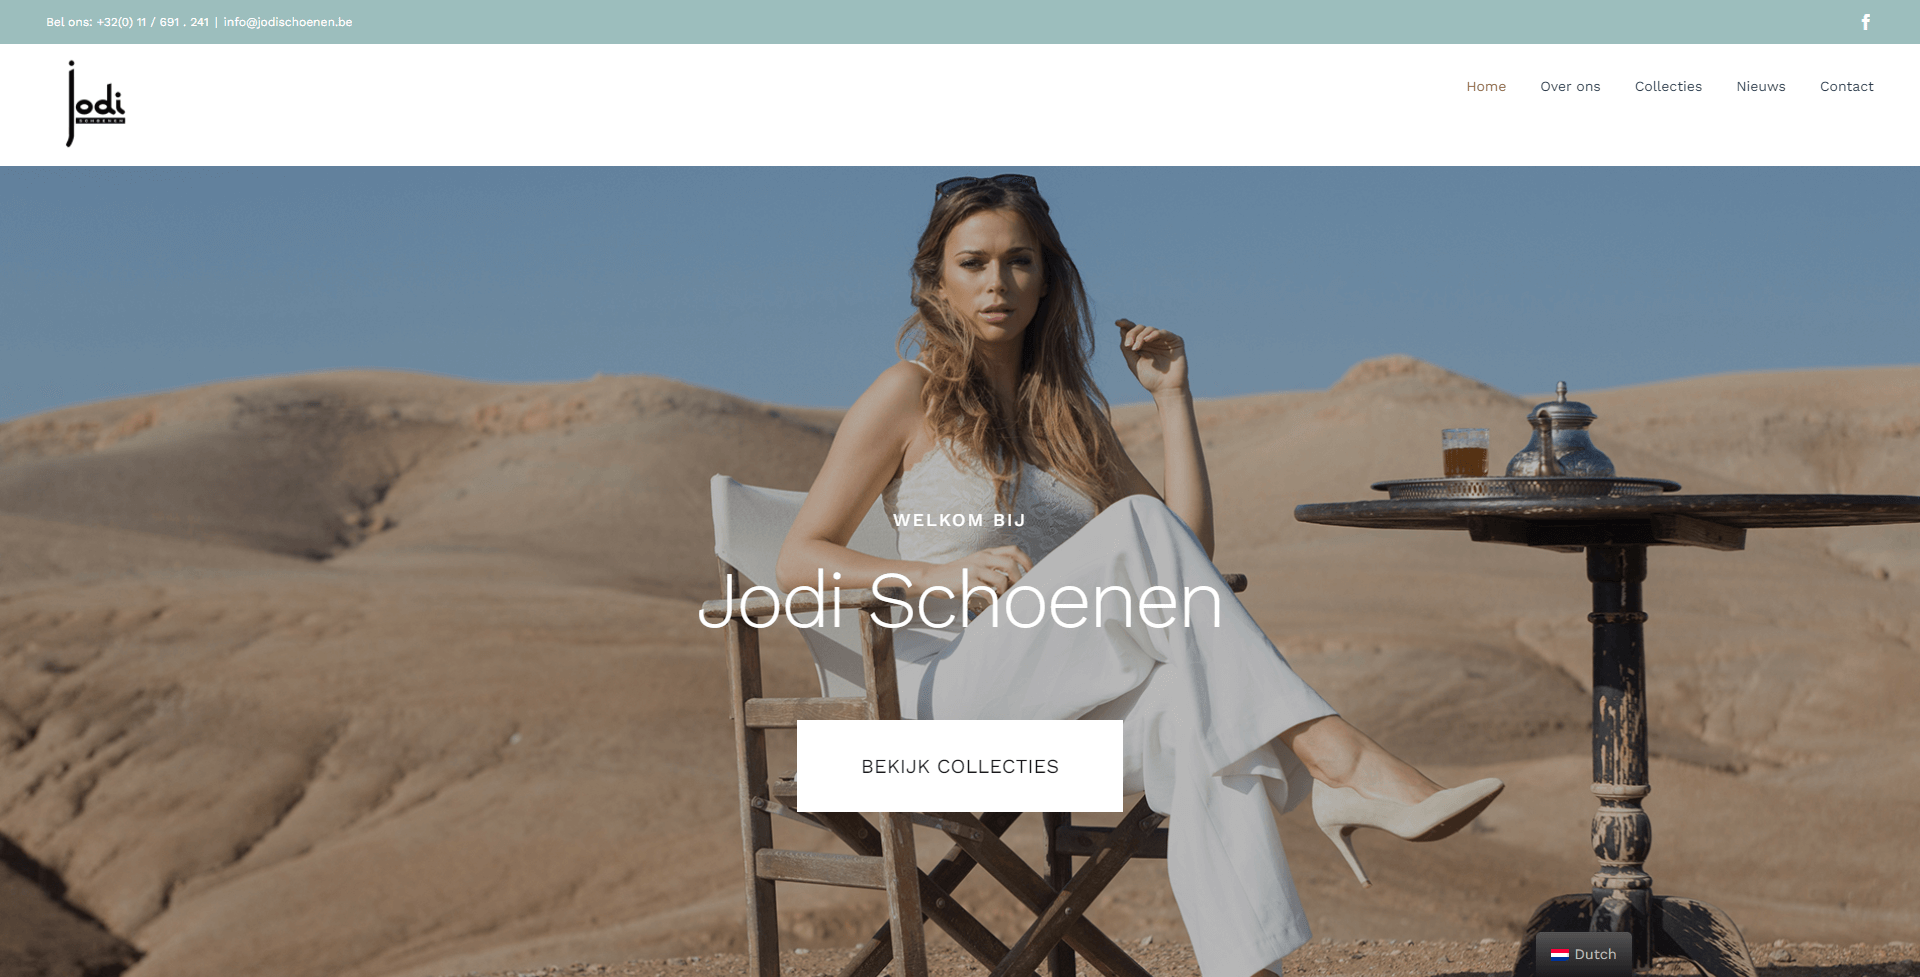 jodischoenen nybe retail kleding sector website maken